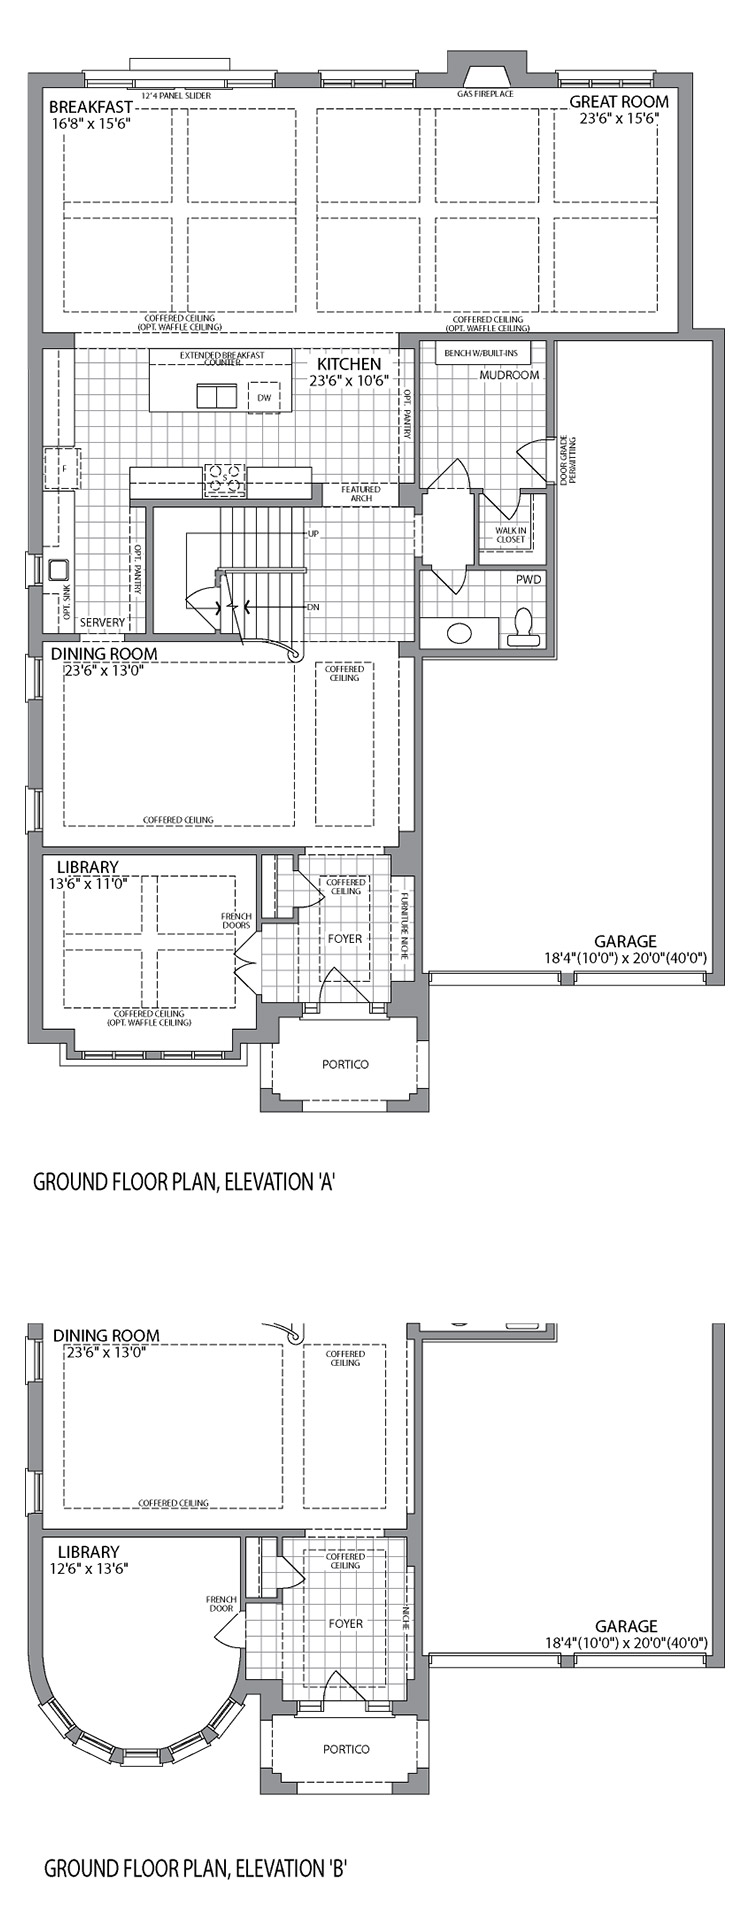 Ground Floor Elevation A & B